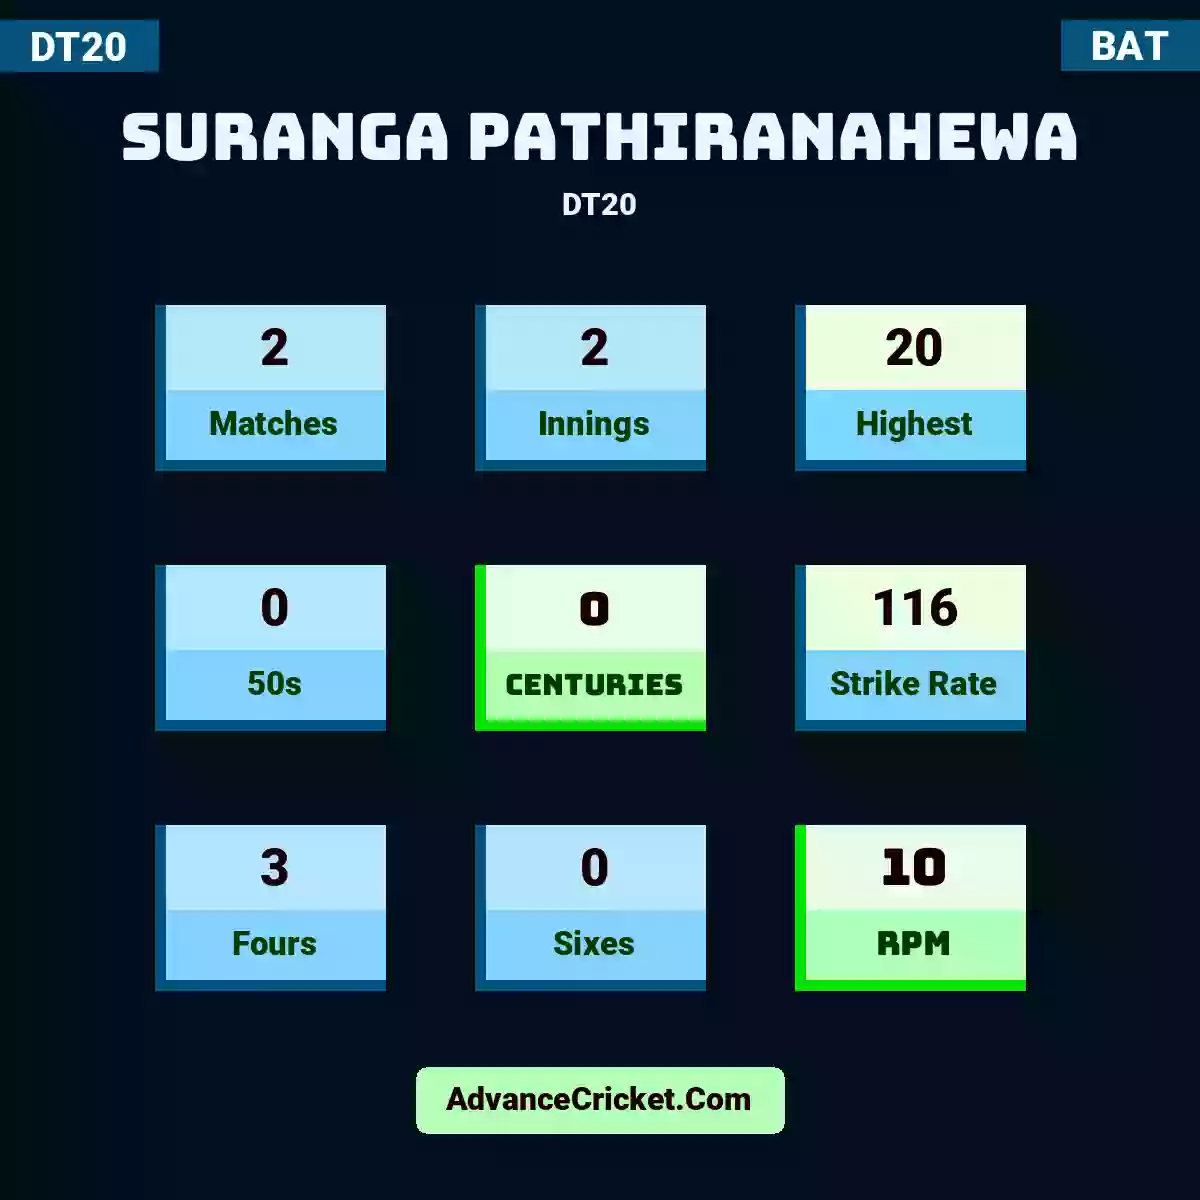 Suranga Pathiranahewa DT20 , Suranga Pathiranahewa played 2 matches, scored 20 runs as highest, 0 half-centuries, and 0 centuries, with a strike rate of 116. S.Pathiranahewa hit 3 fours and 0 sixes, with an RPM of 10.